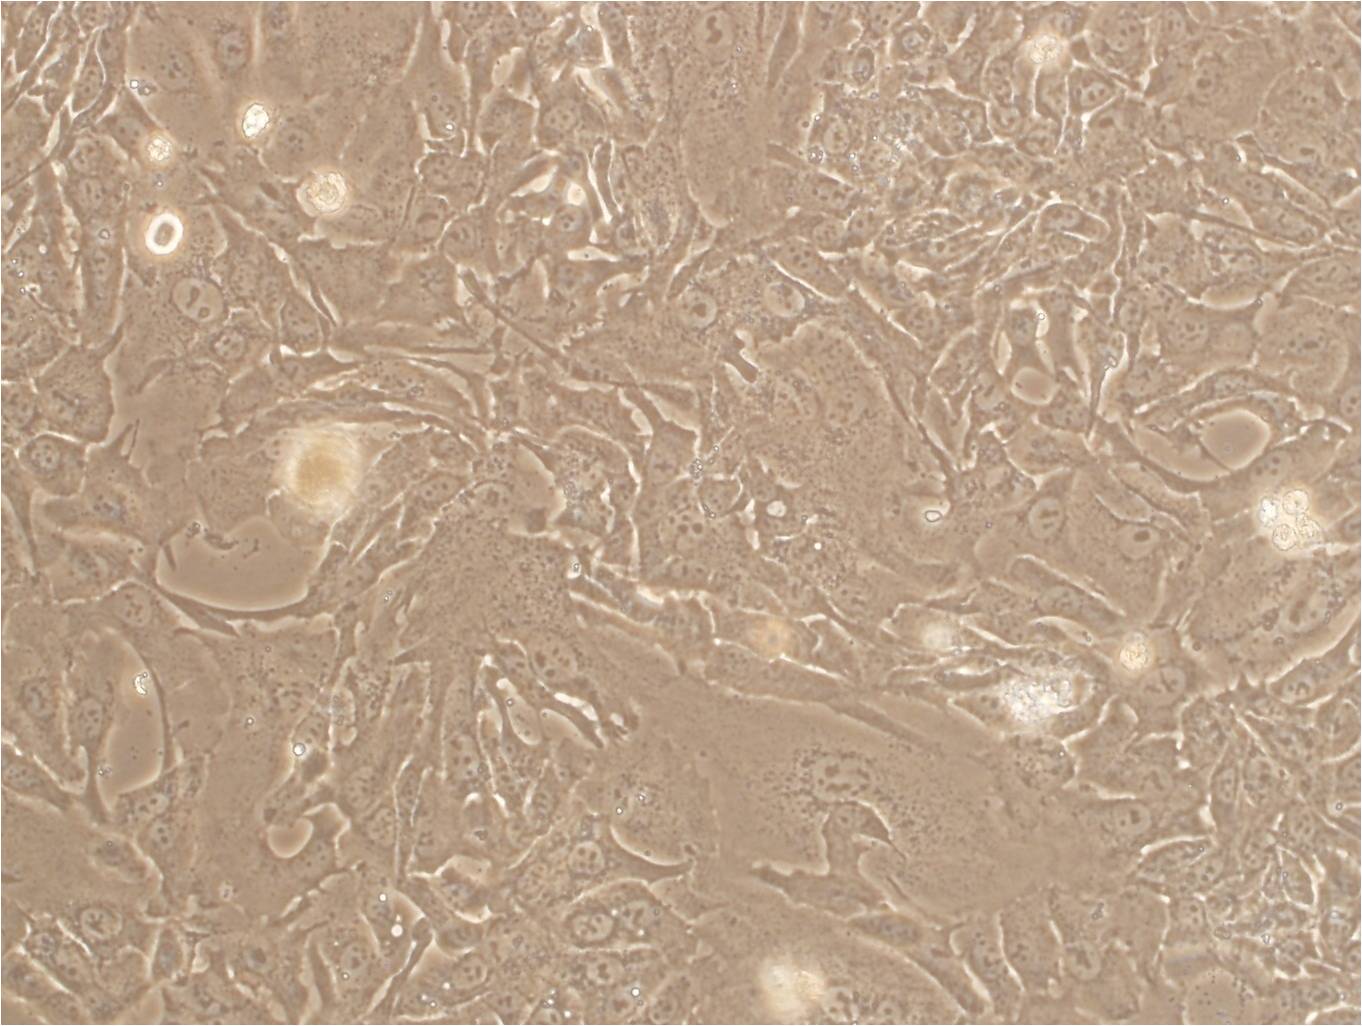 OVCA420 cell line人卵巢癌细胞系